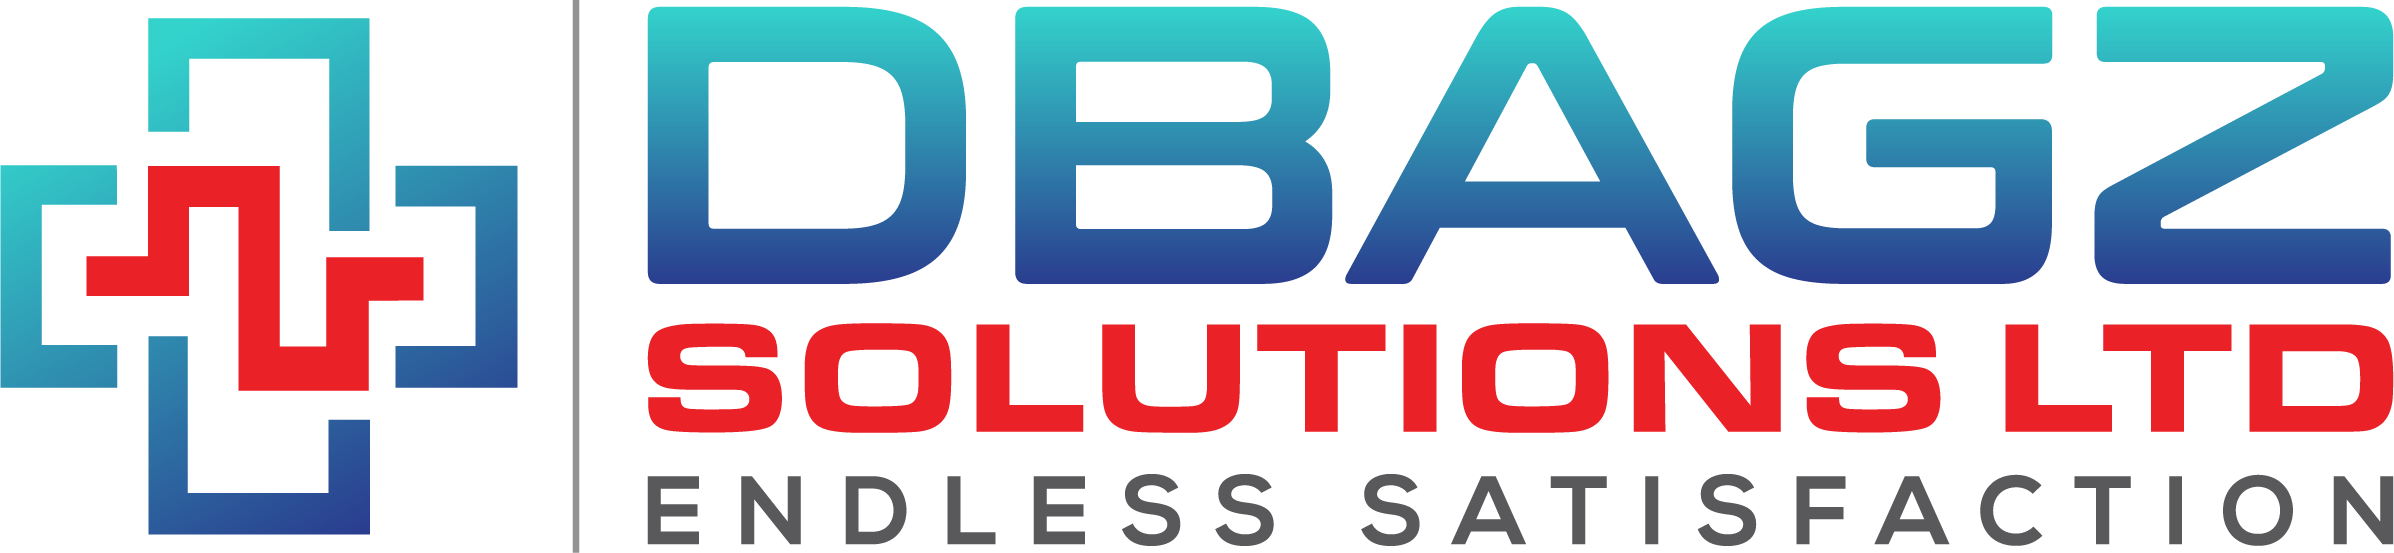 logo for DBAGZ SOLUTIONS LTD